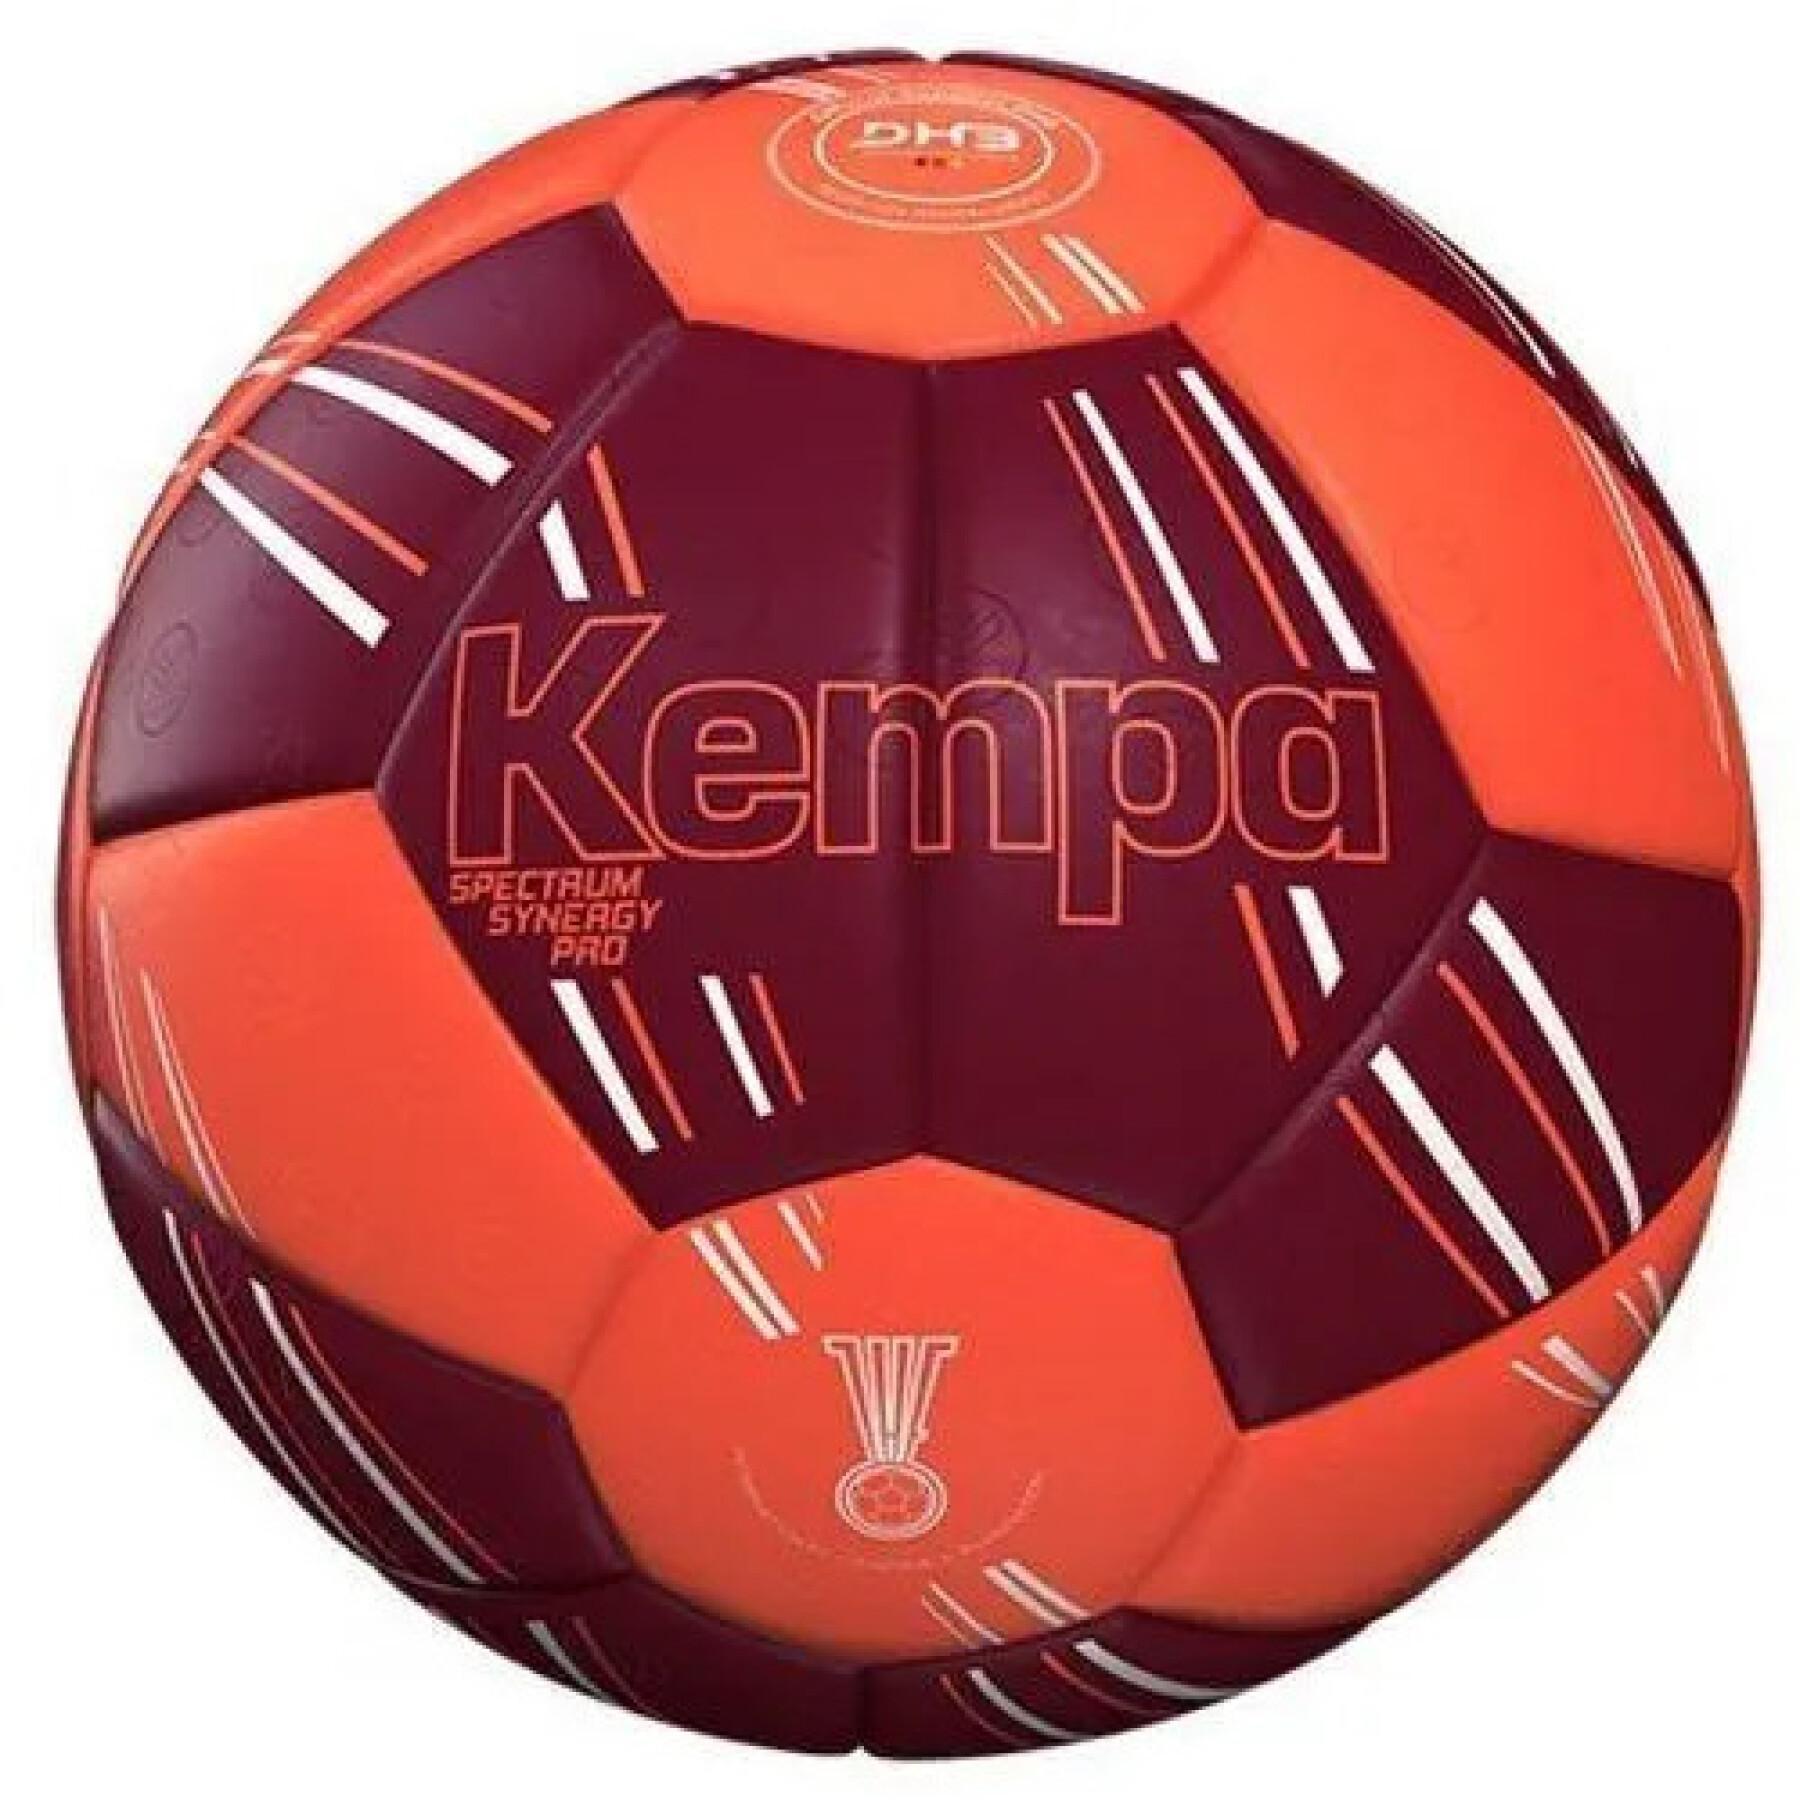 Balon Kempa Spectrum Synergy Pro